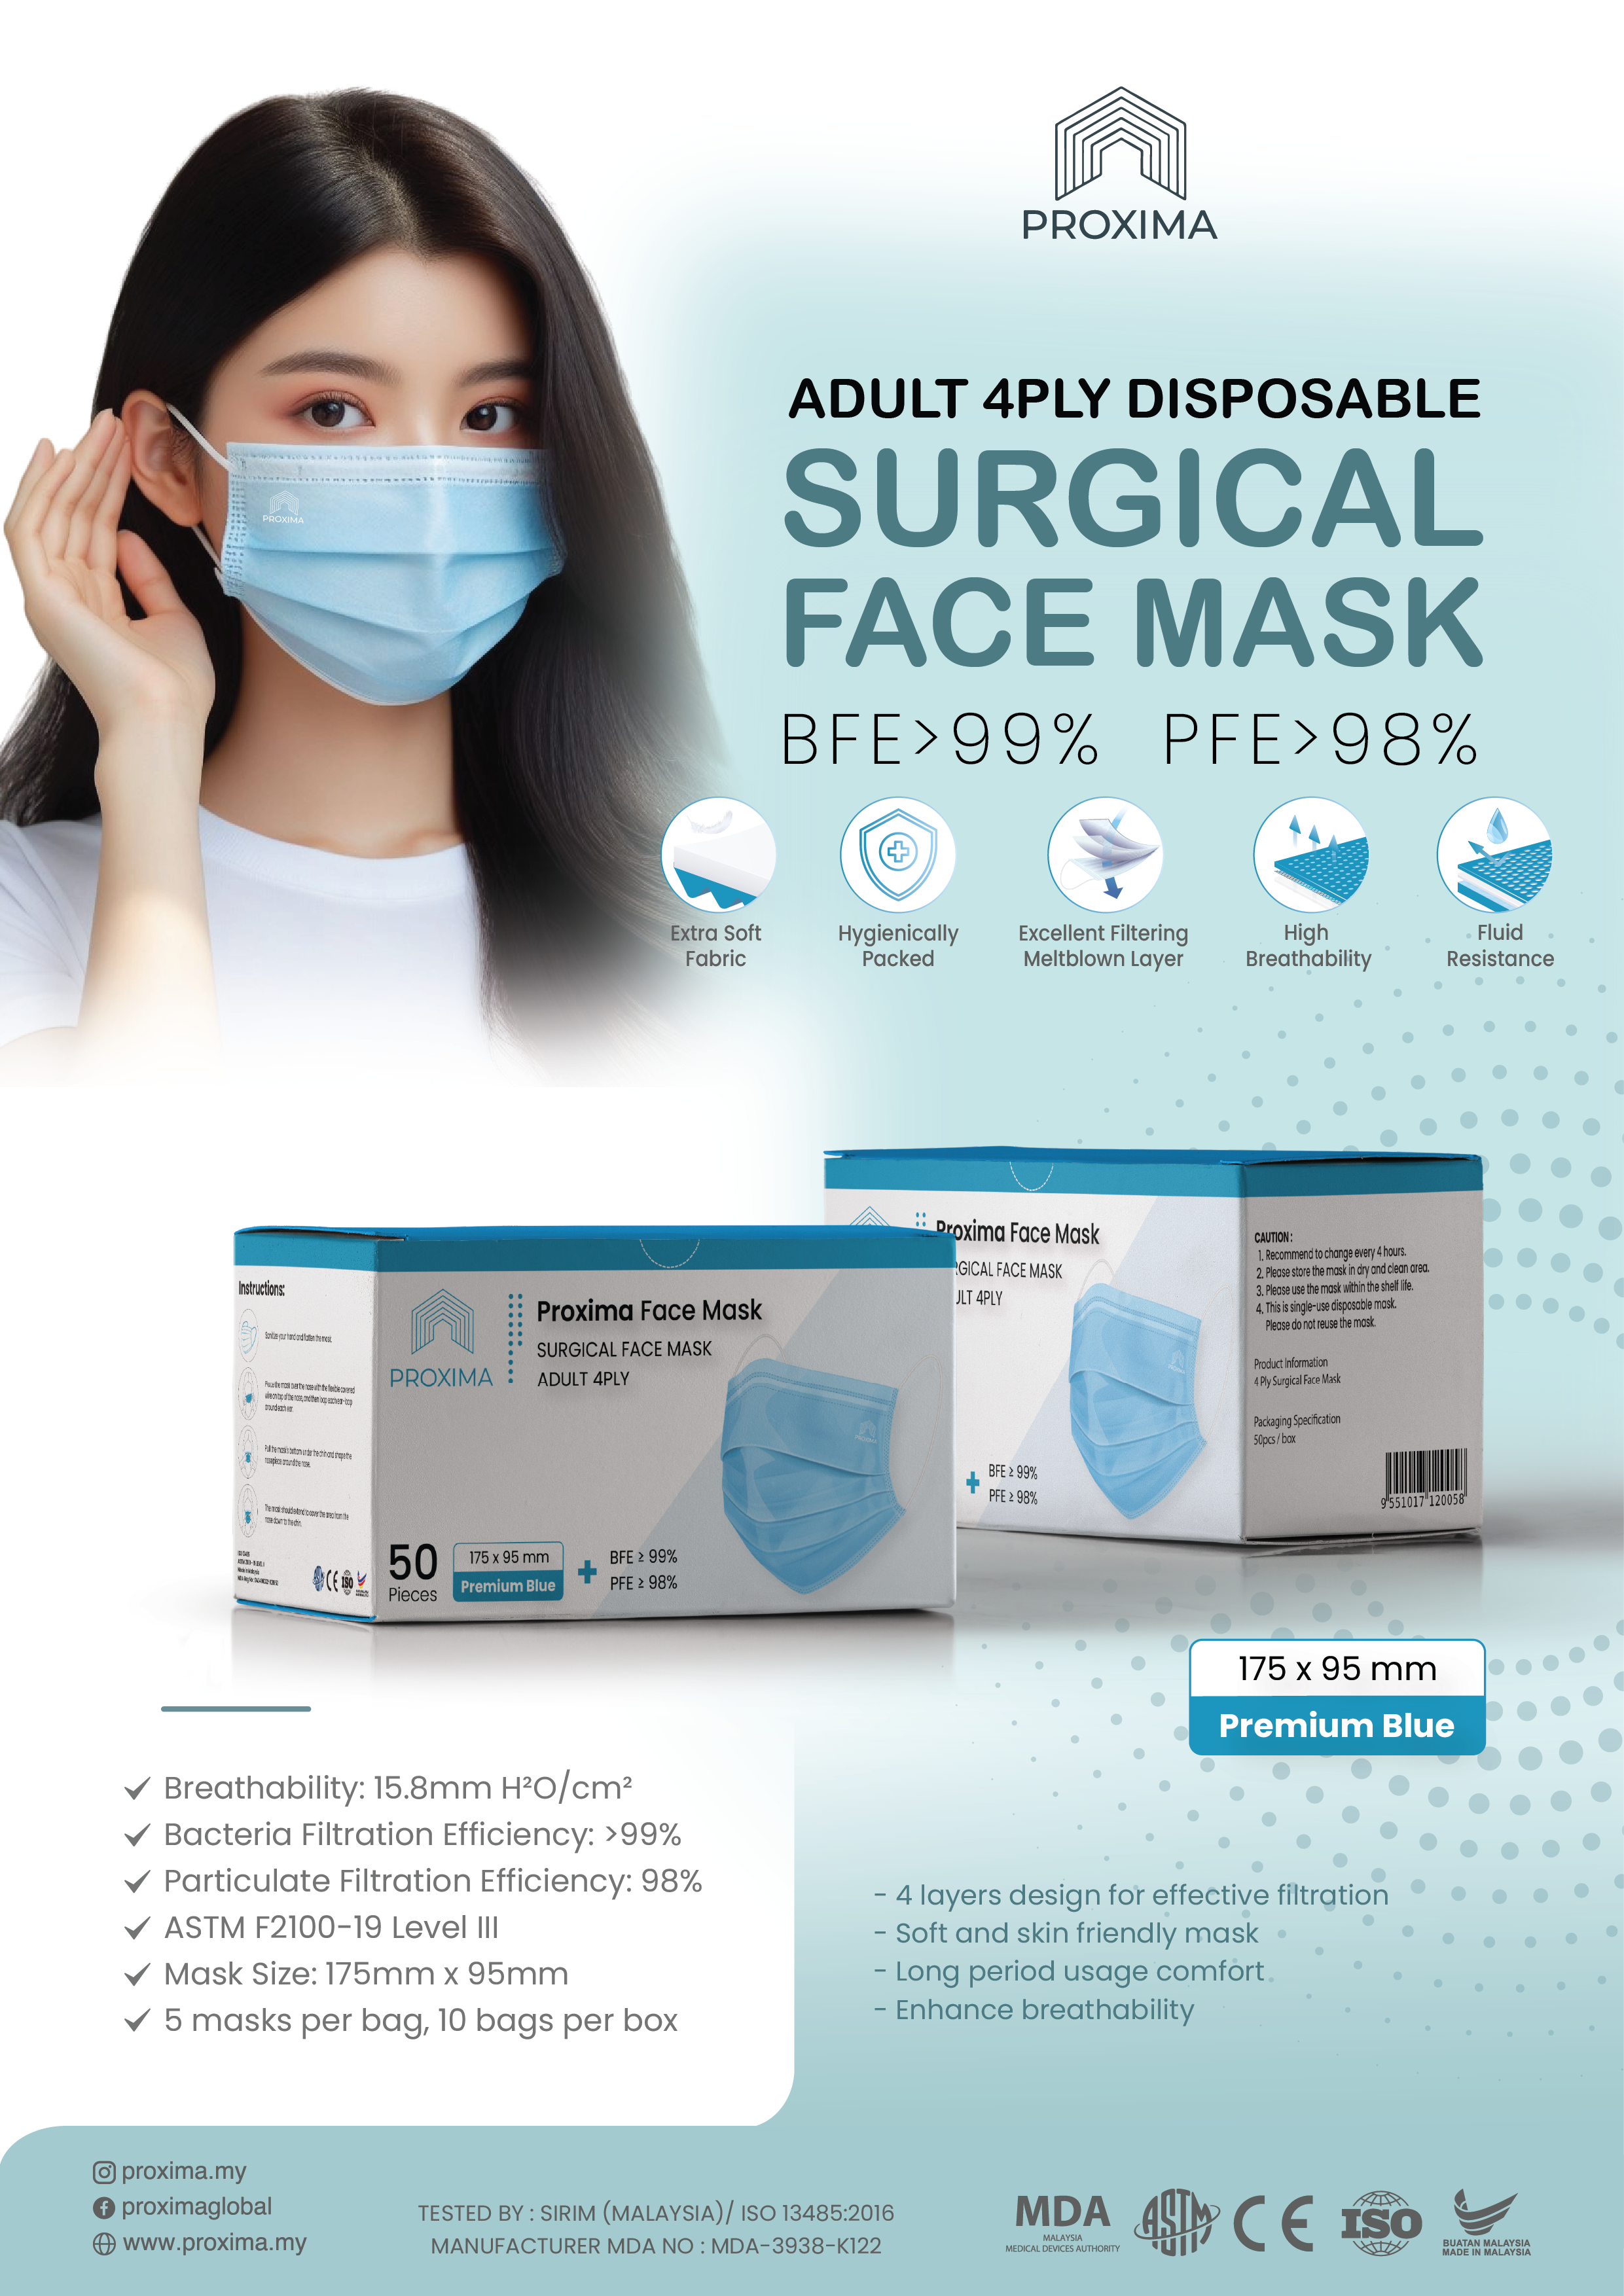 Proxima 4ply Face Mask Broucher (Black, White, Blue)-02